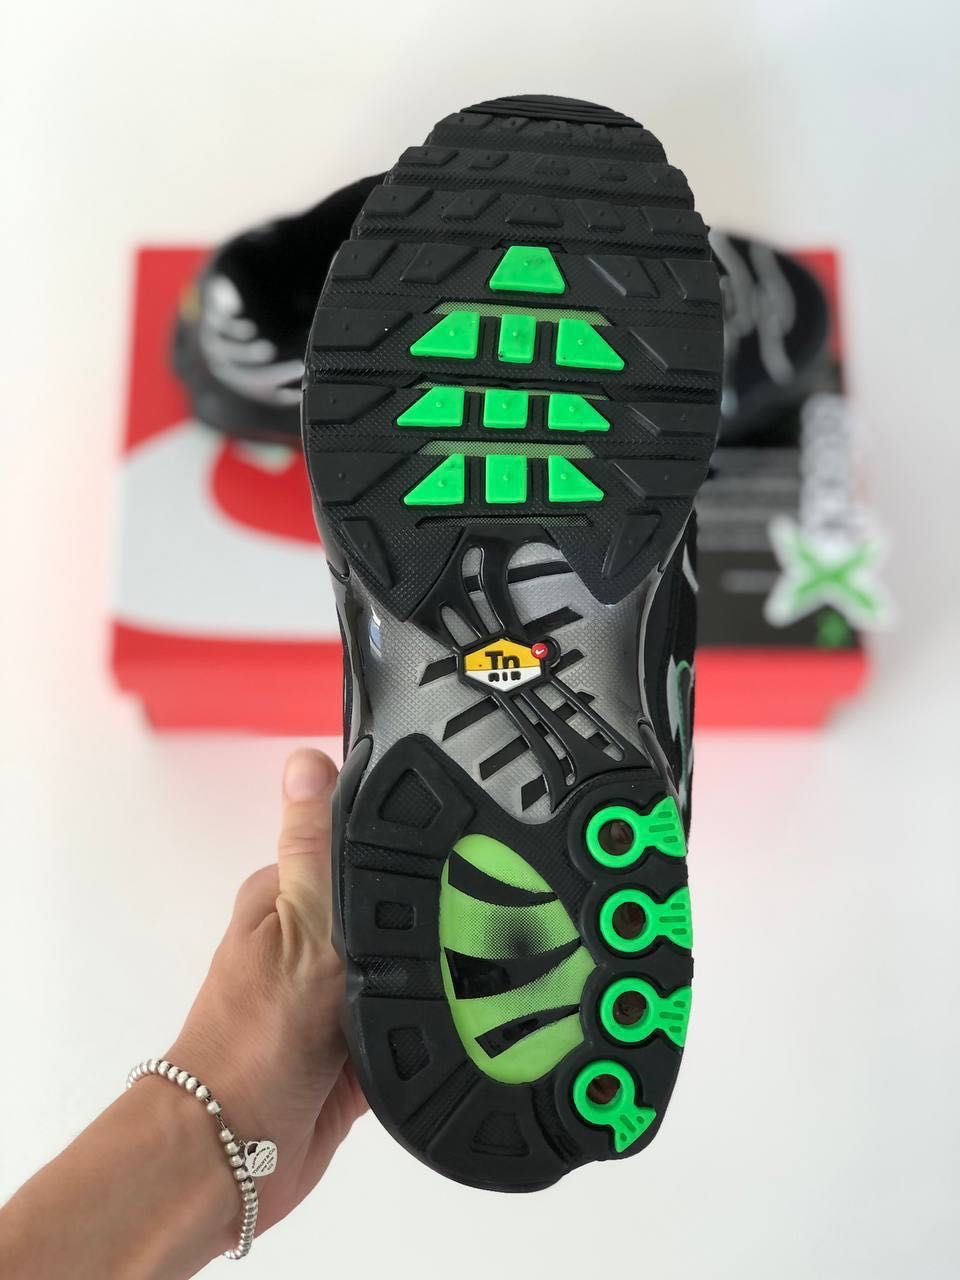 Мужские кроссовки Nike Air Max Tn Black\Grey. Размеры 40-45